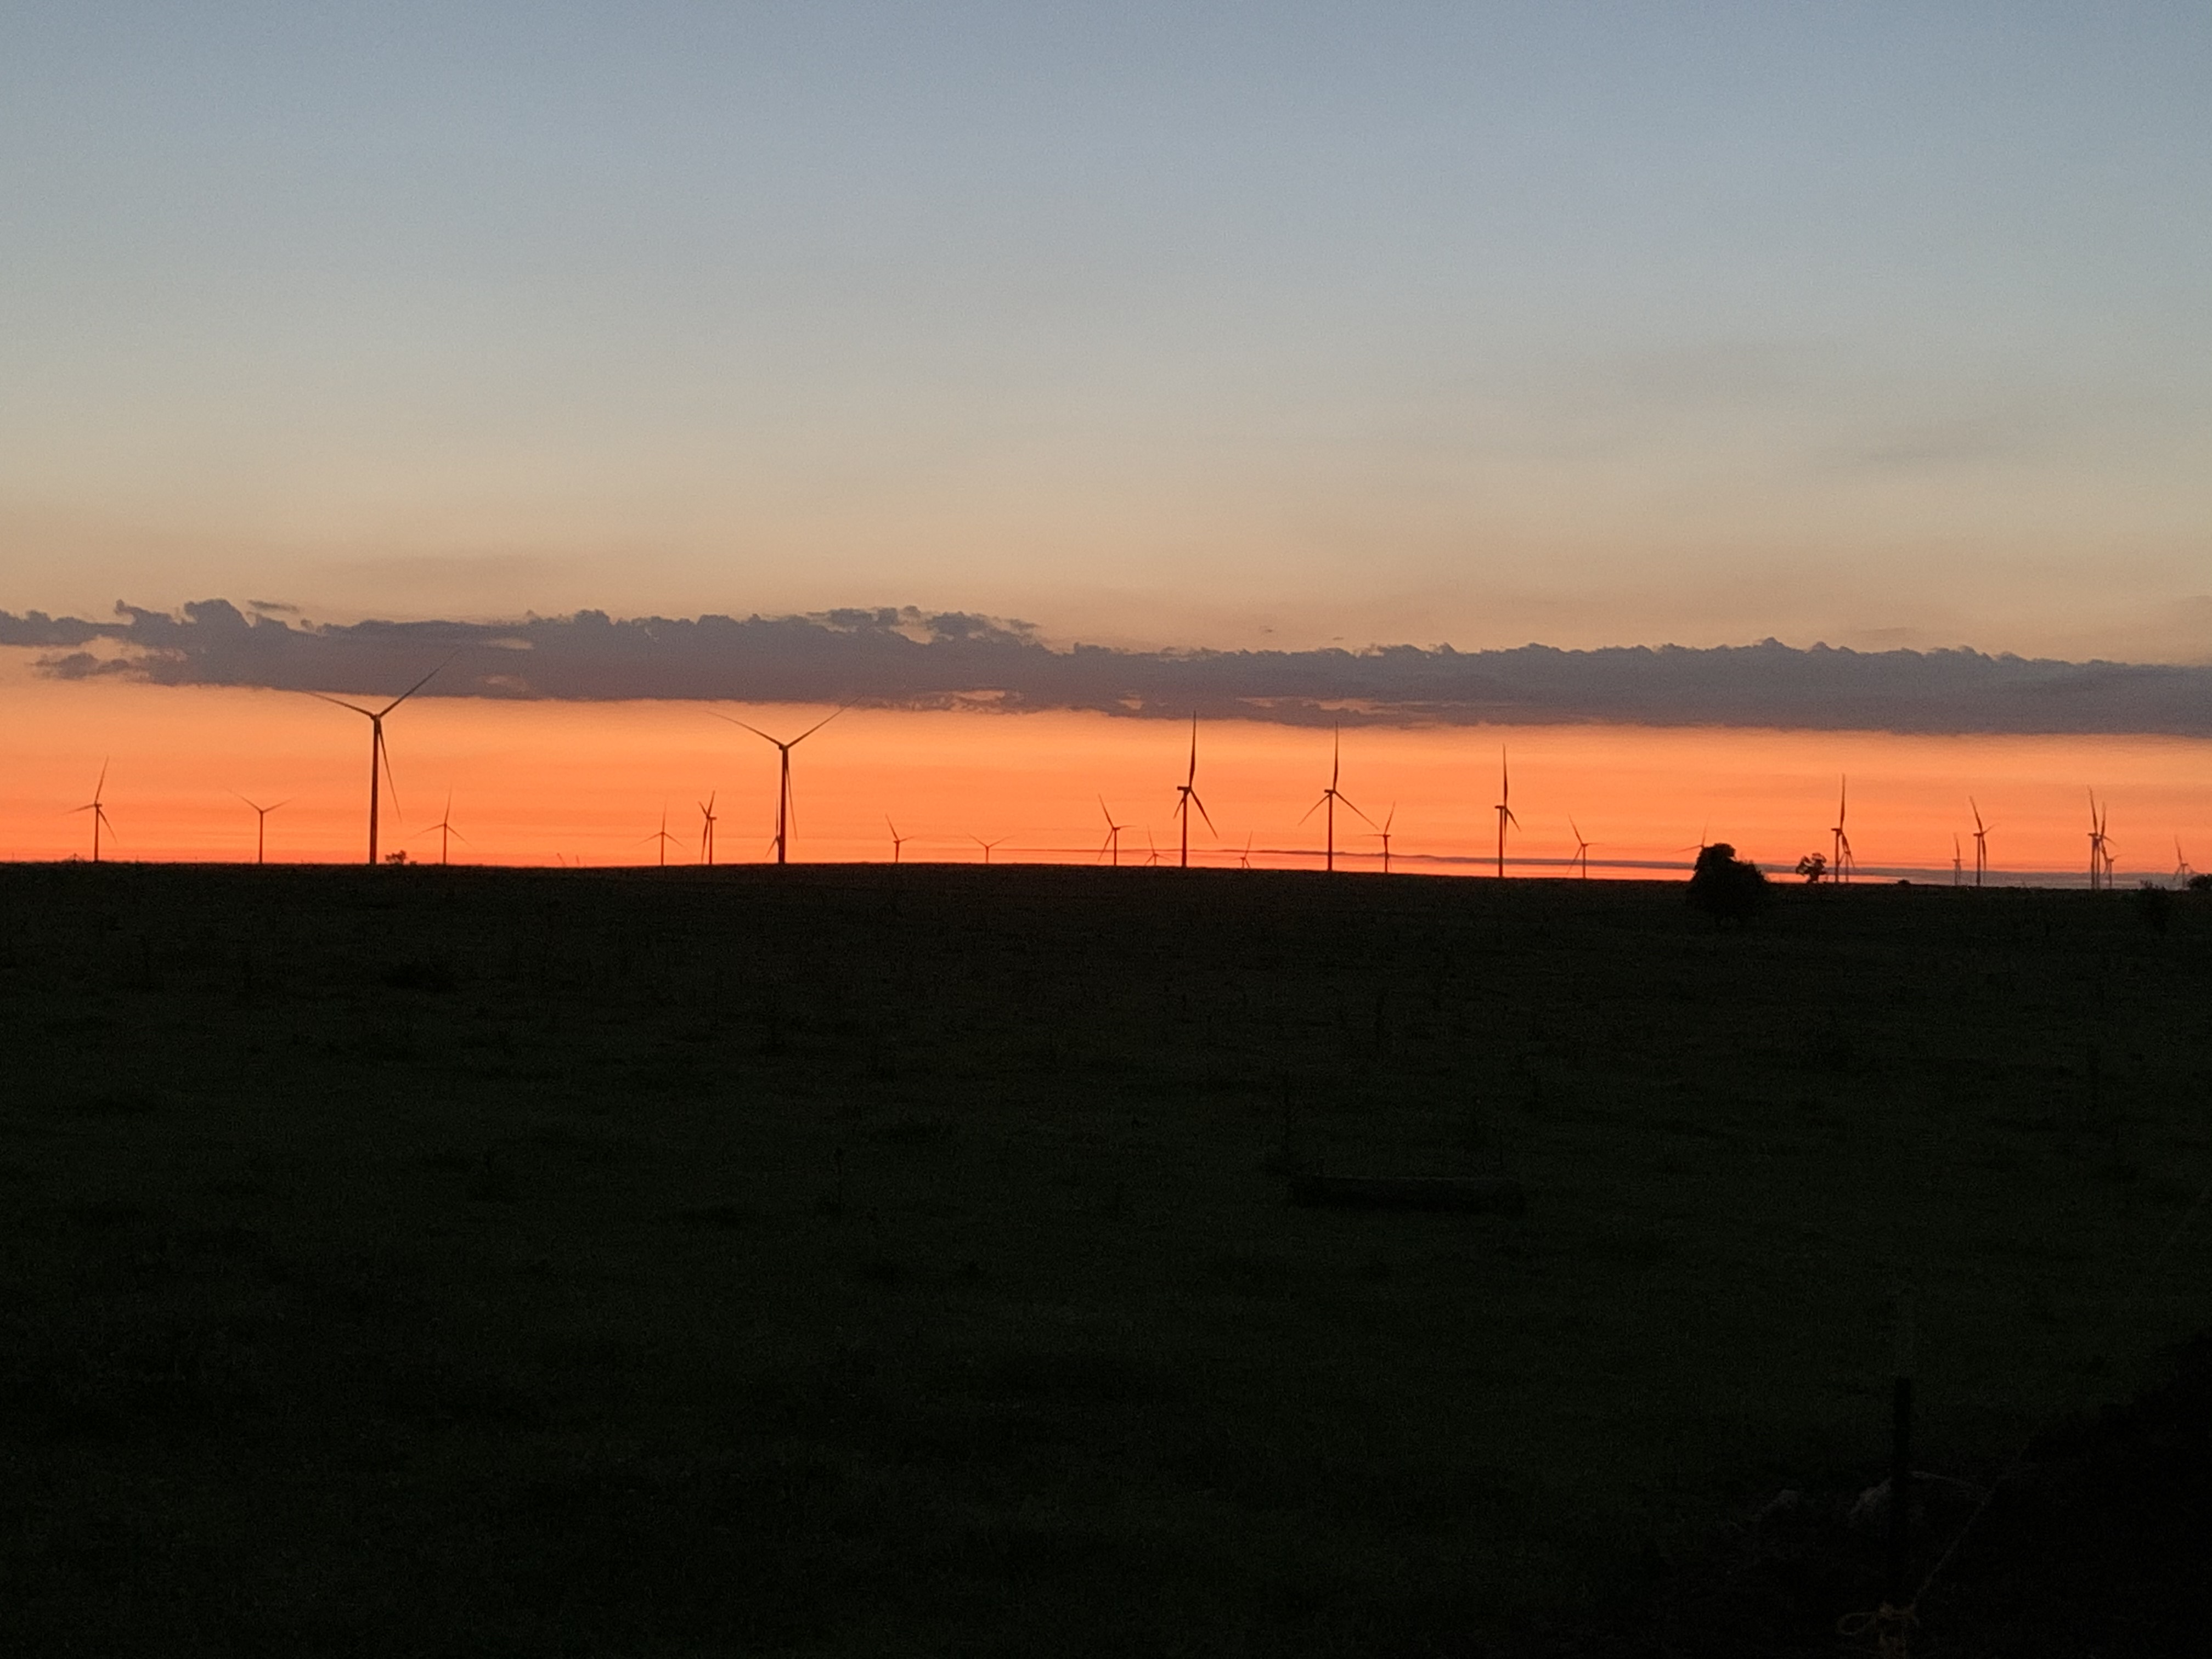 Turbines at sunset